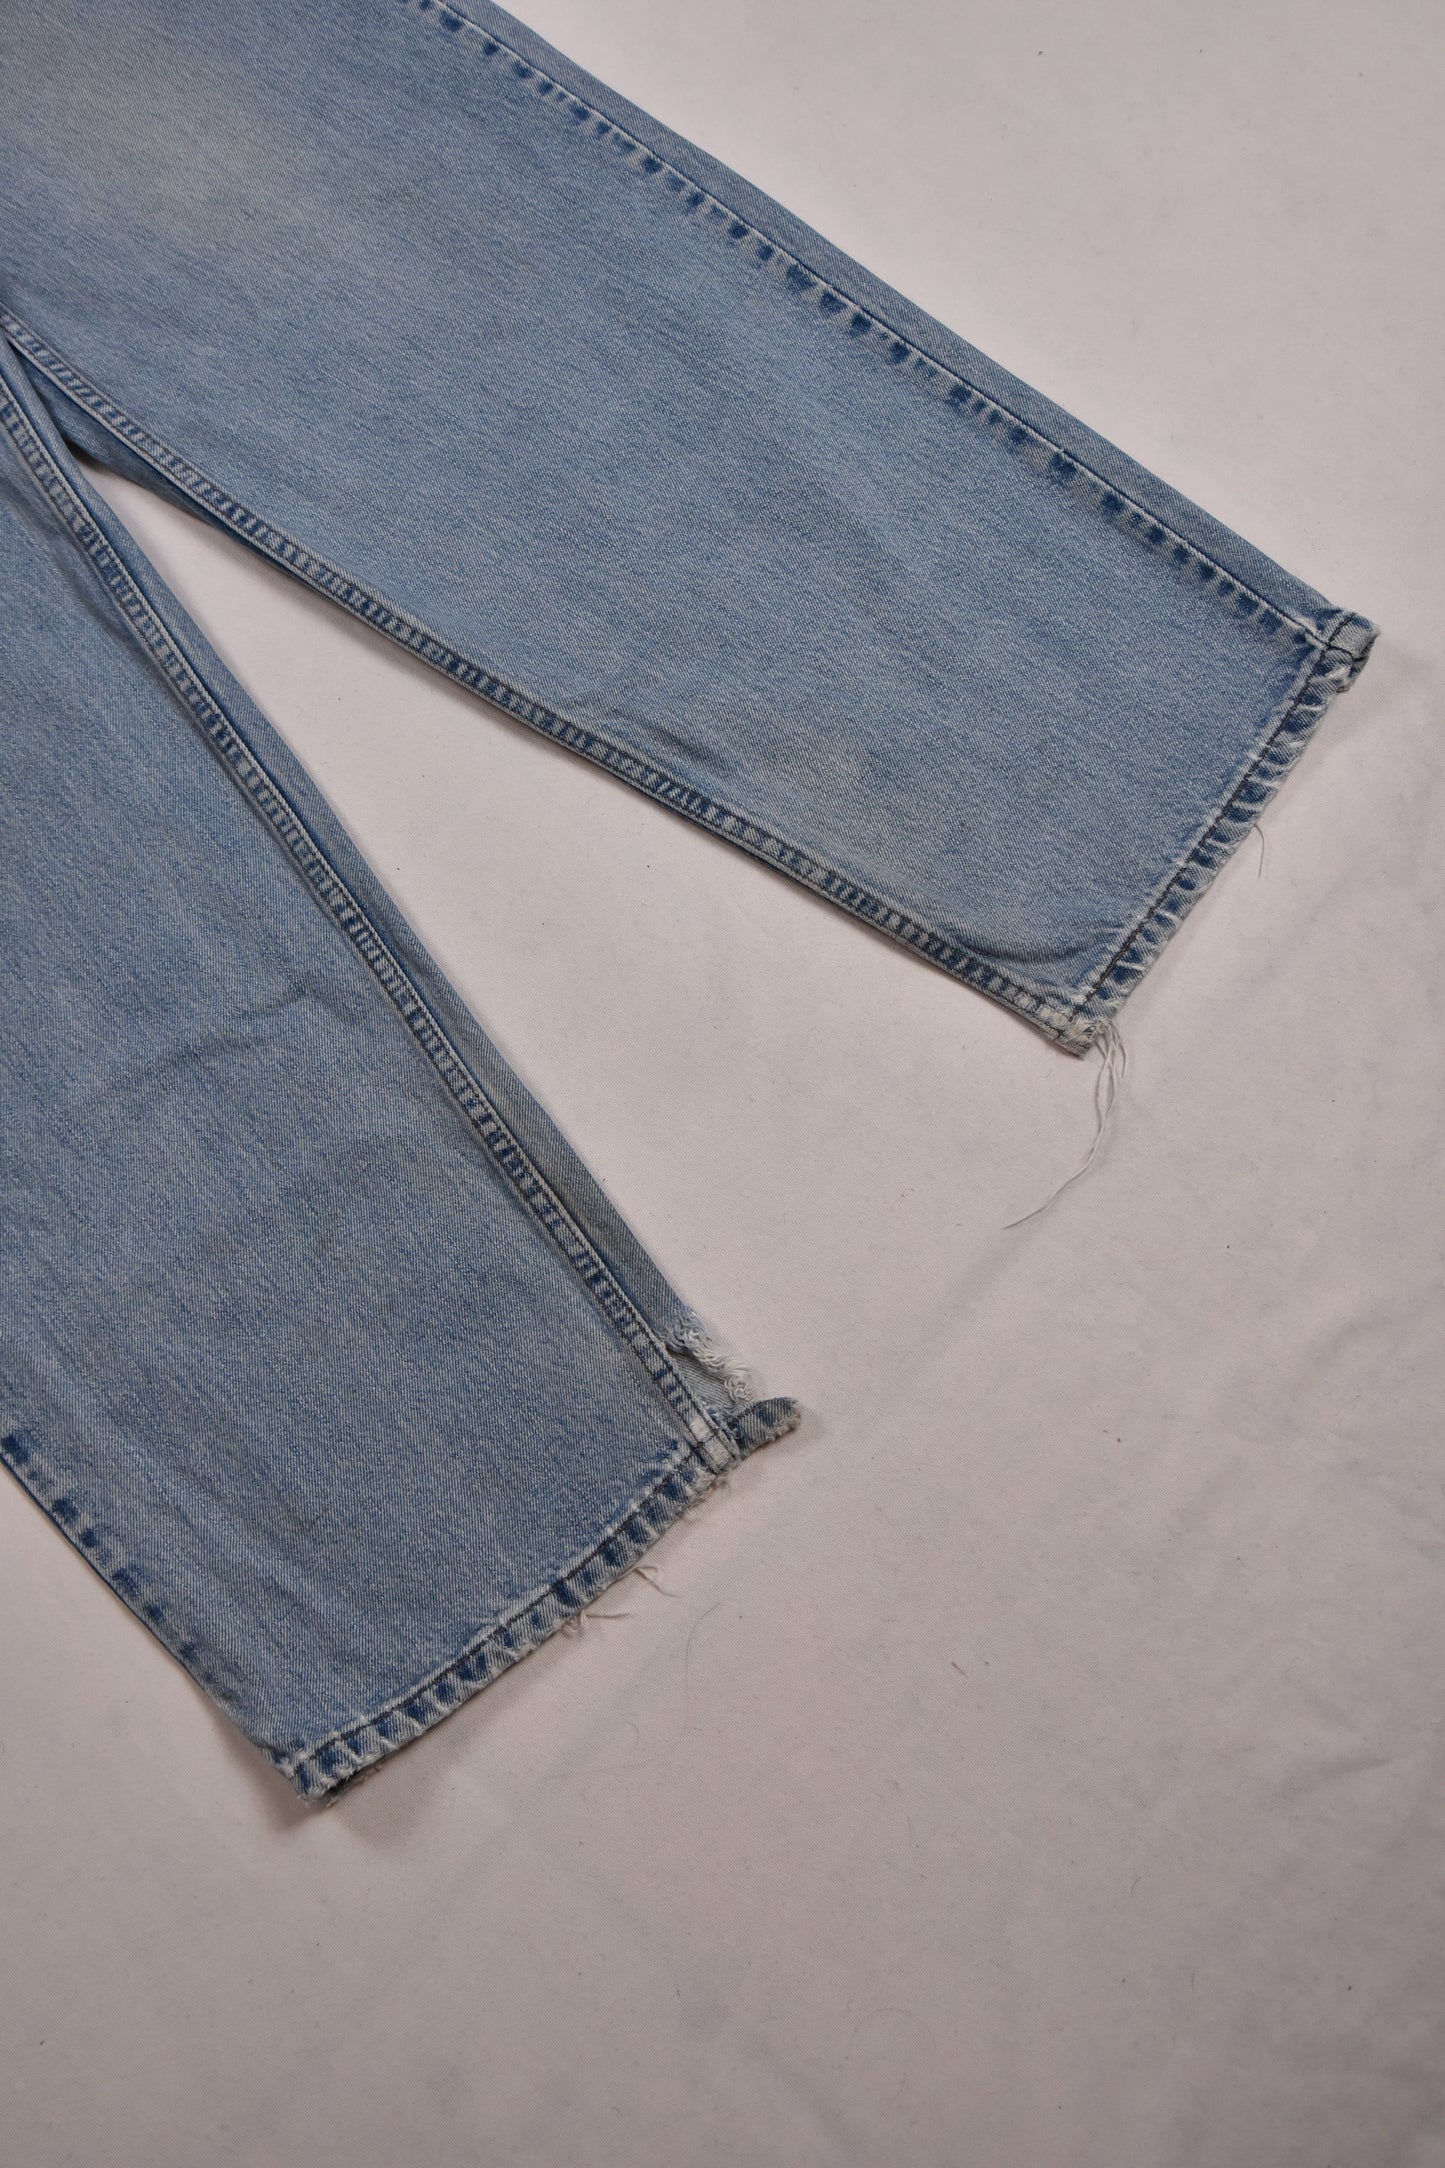 Levi's Silver Tab Jeans Vintage / 36x32